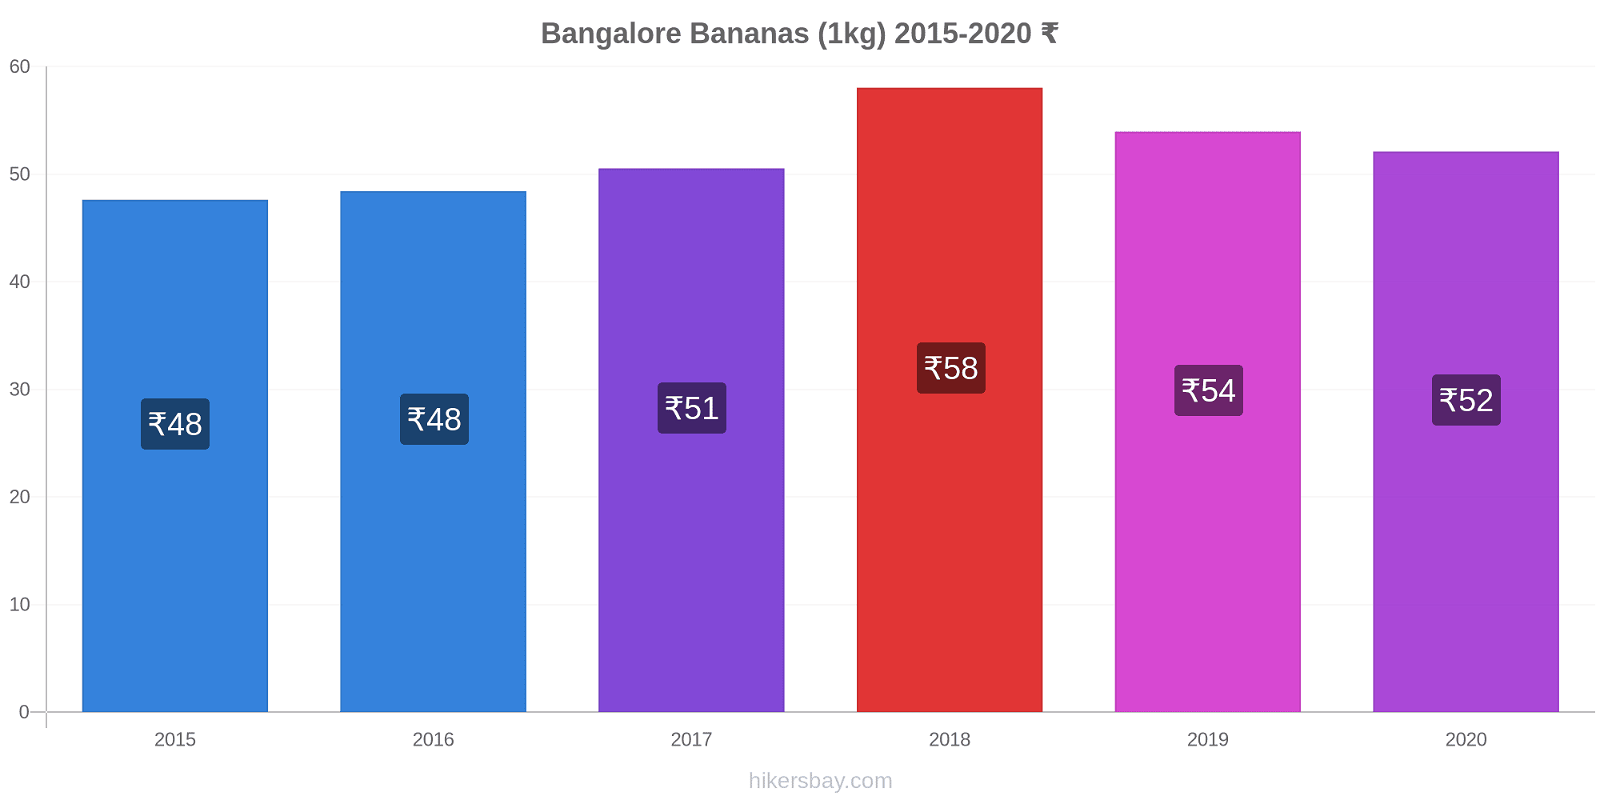 Bangalore price changes Bananas (1kg) hikersbay.com